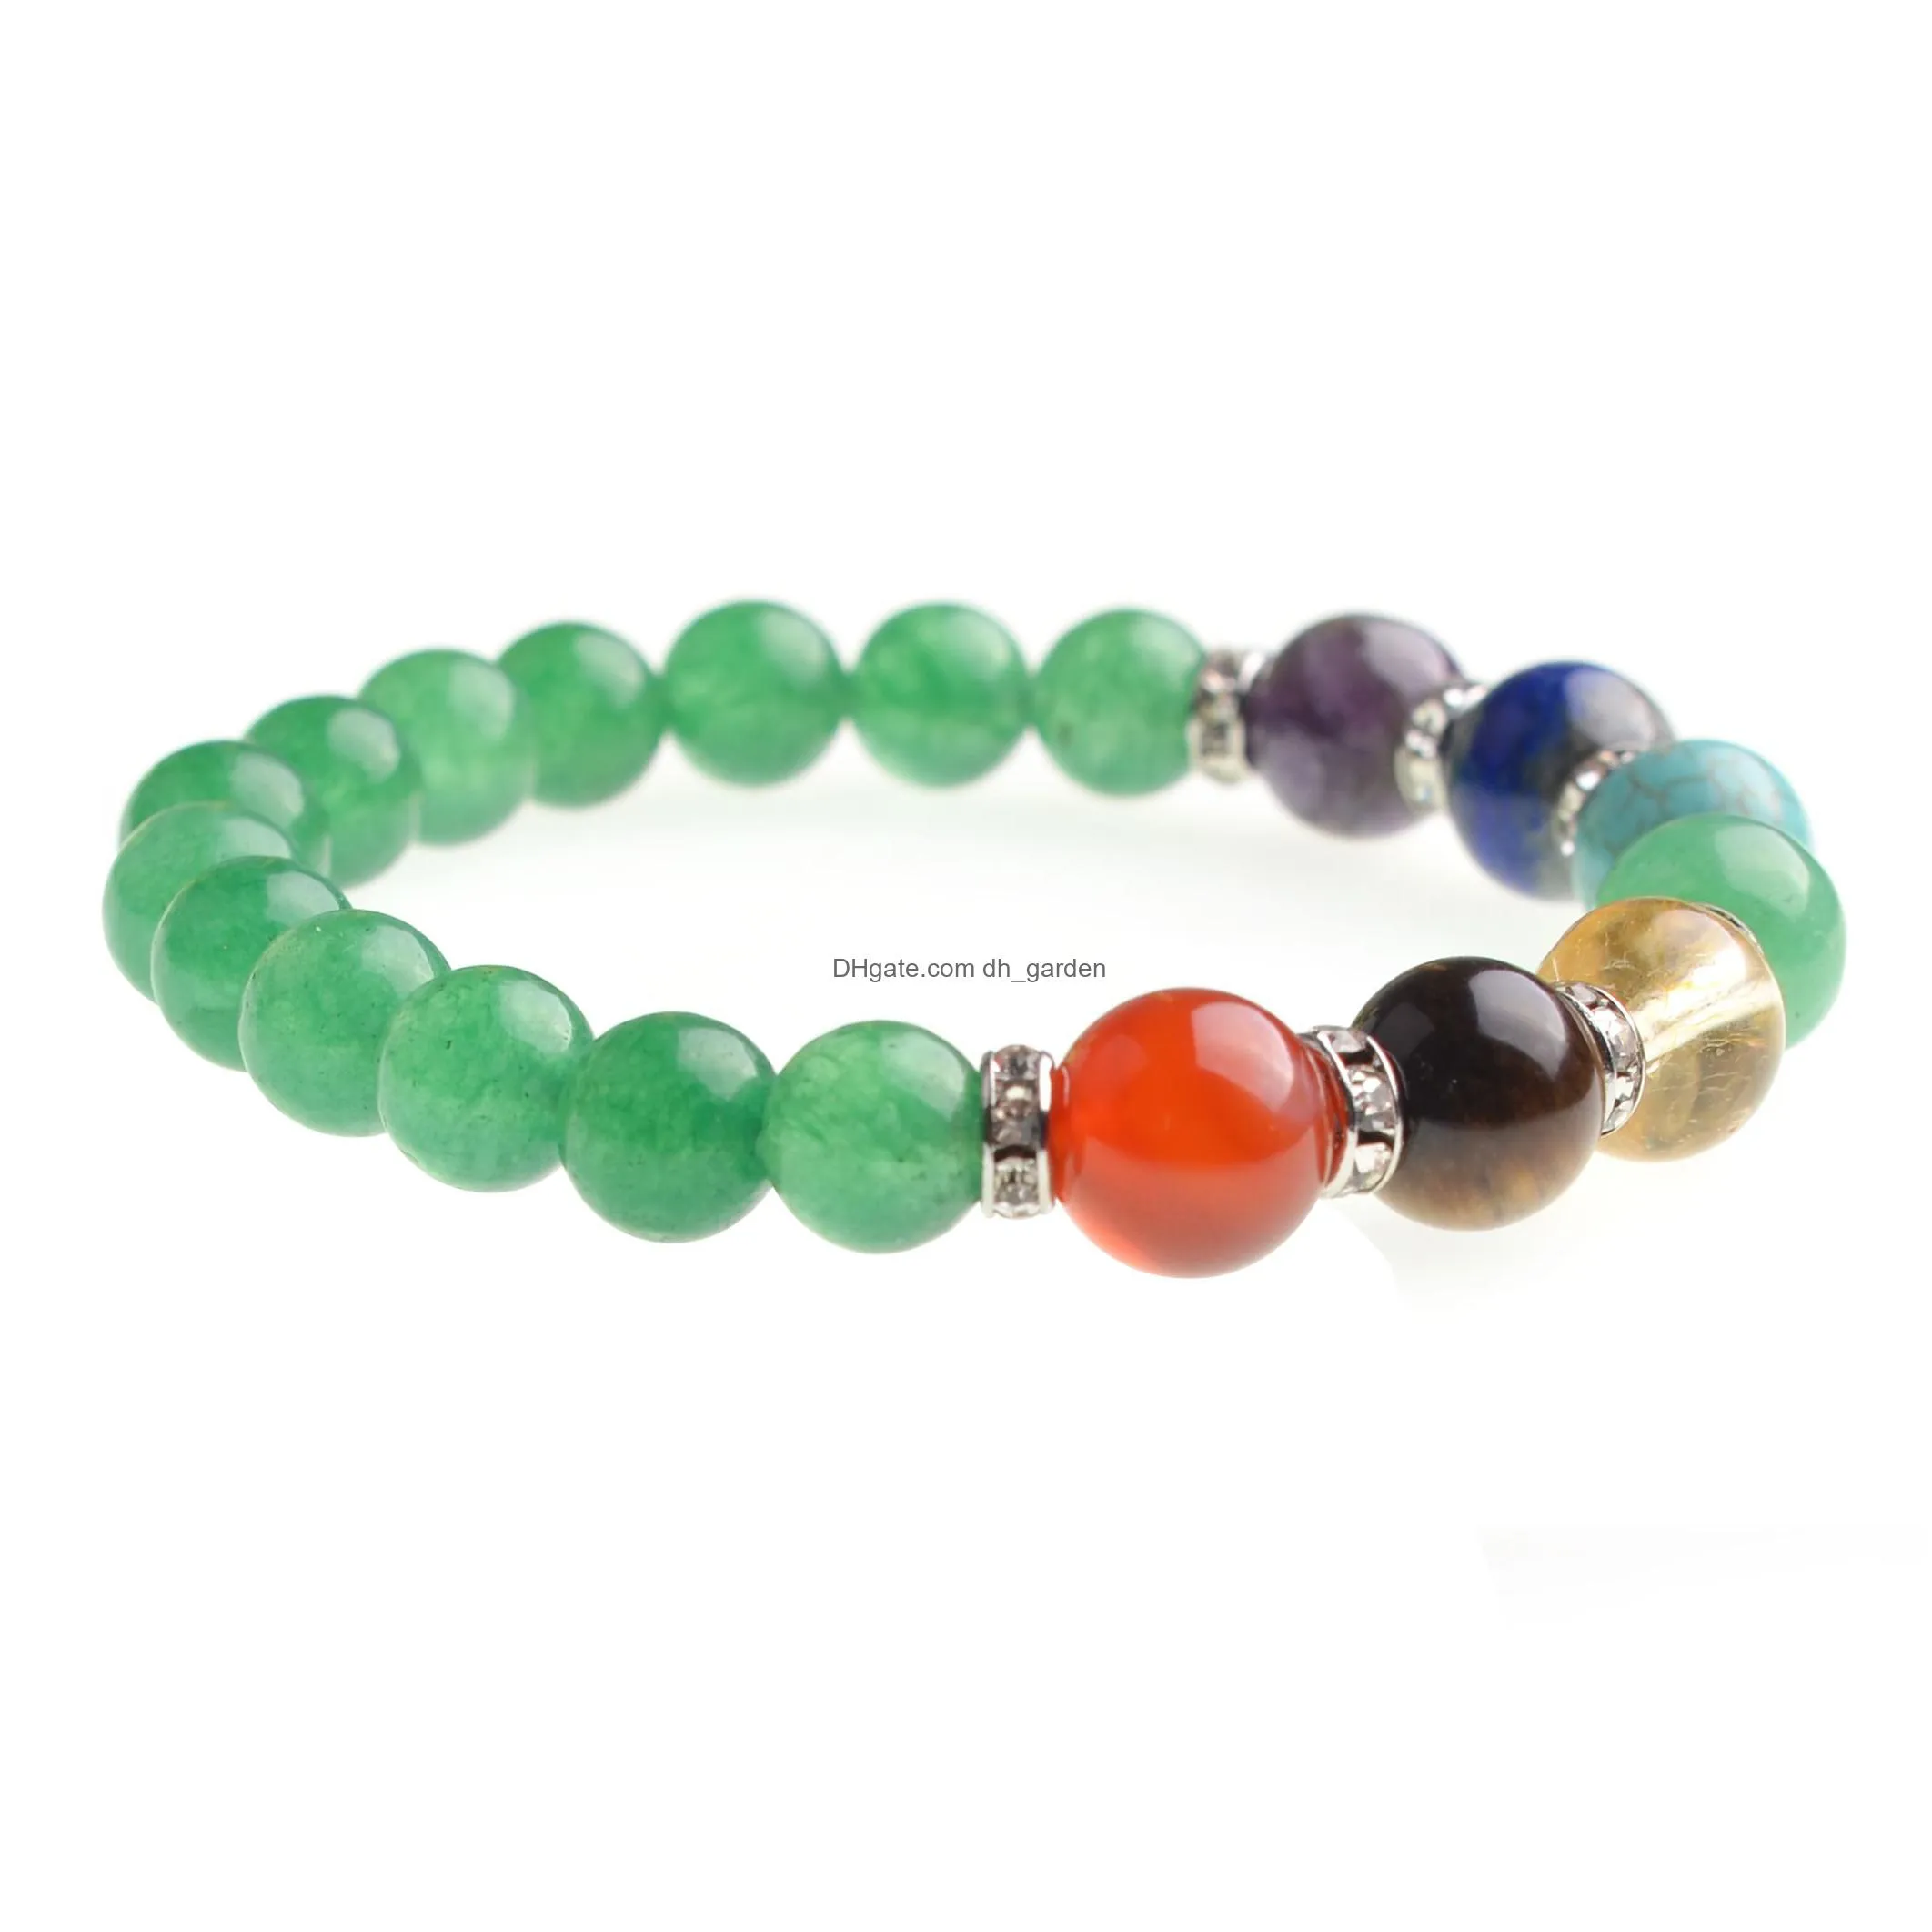 7 gemstone bracelet personalized 8 mm 7 chakra semiprecious stones natural gemstone round beads beads healing crystal elastic bracelet